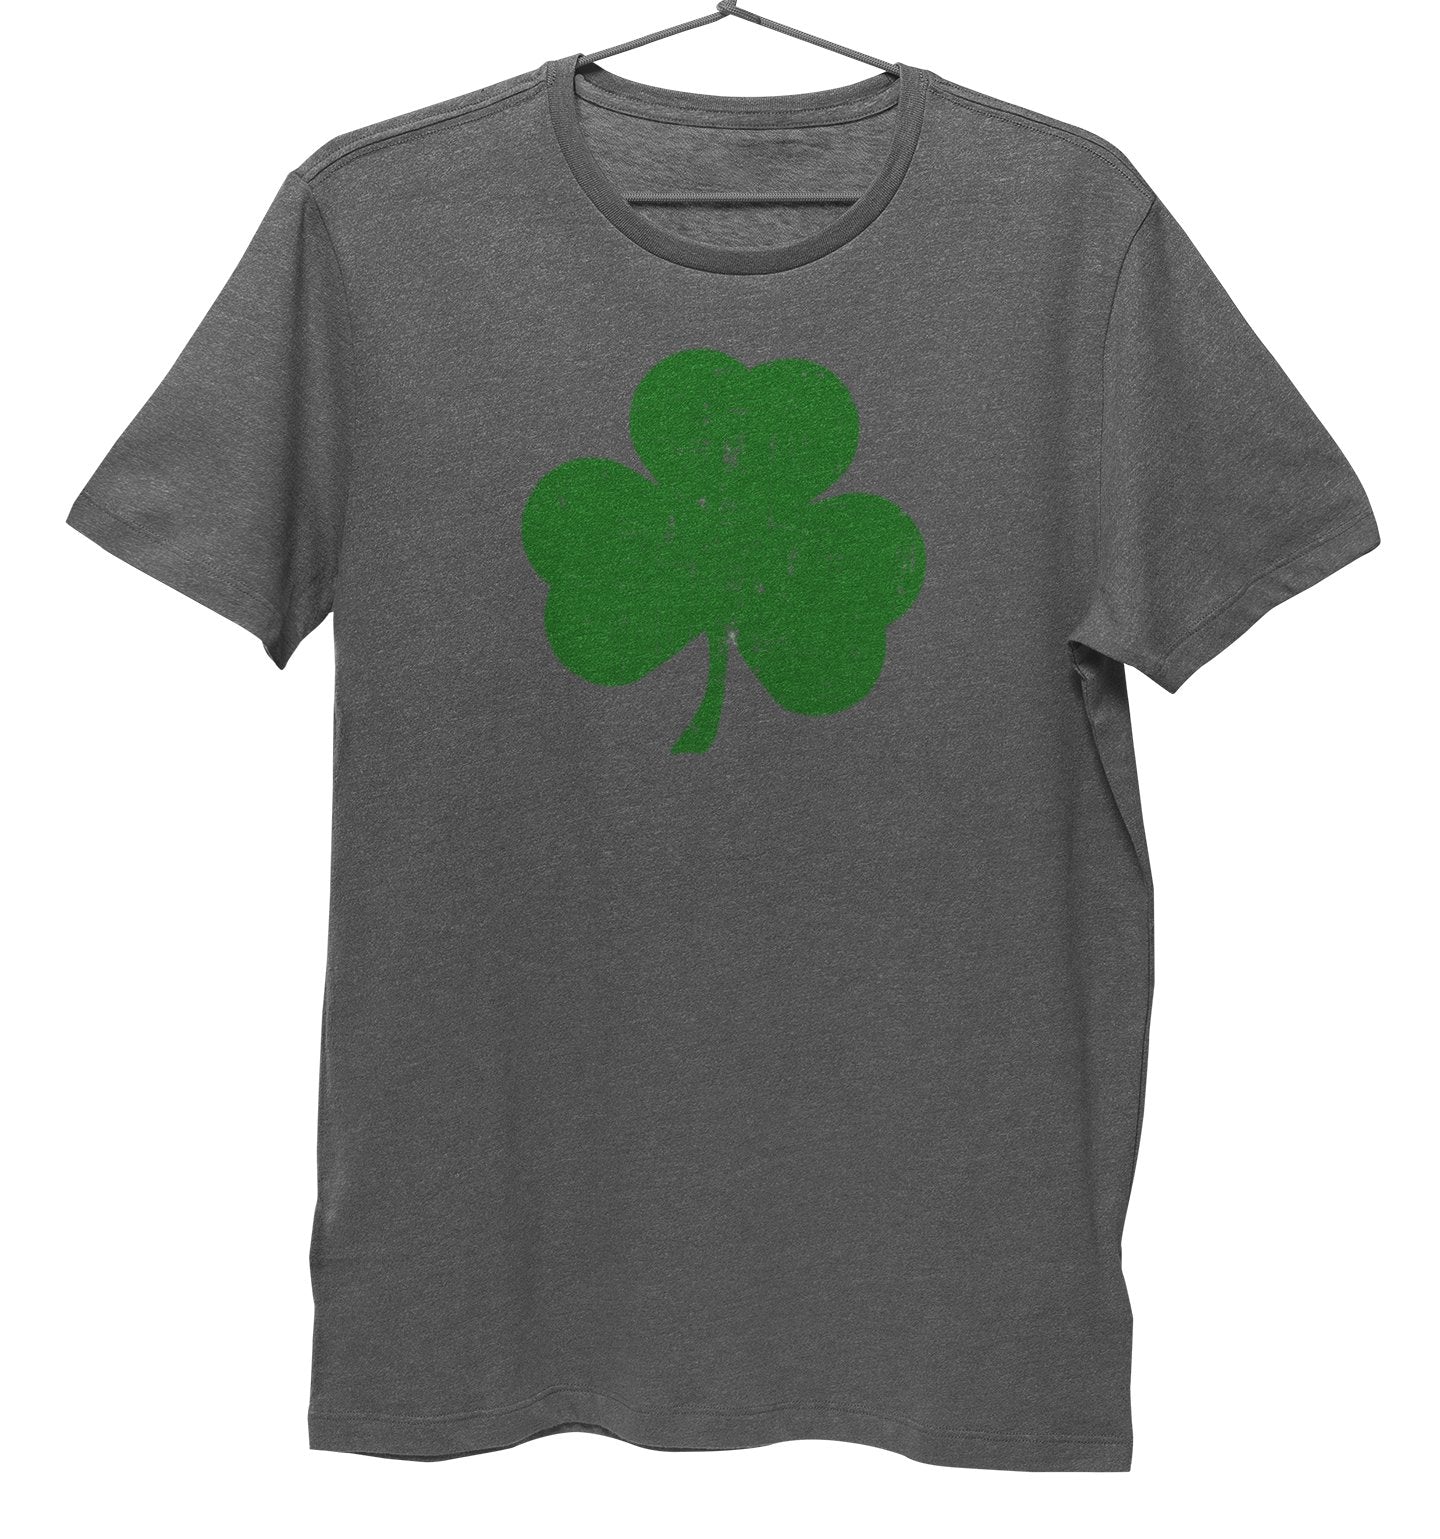 T-shirt Shamrock pour homme (premium, design vieilli, anthracite et vert)